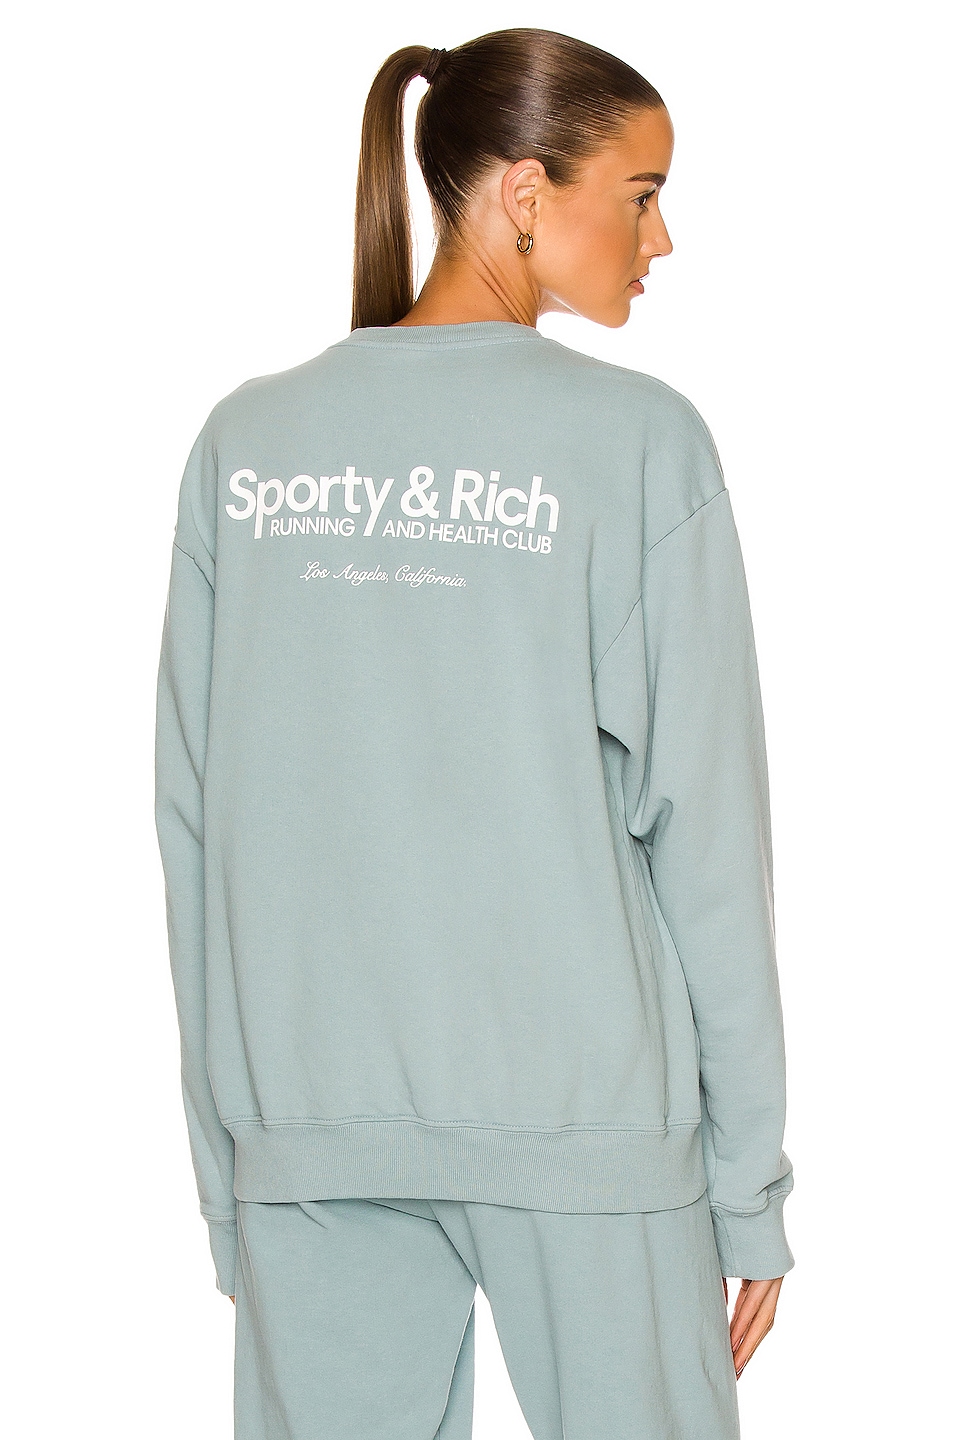 Image 1 of Sporty & Rich Club Crewneck Sweatshirt in Soft Blue & White